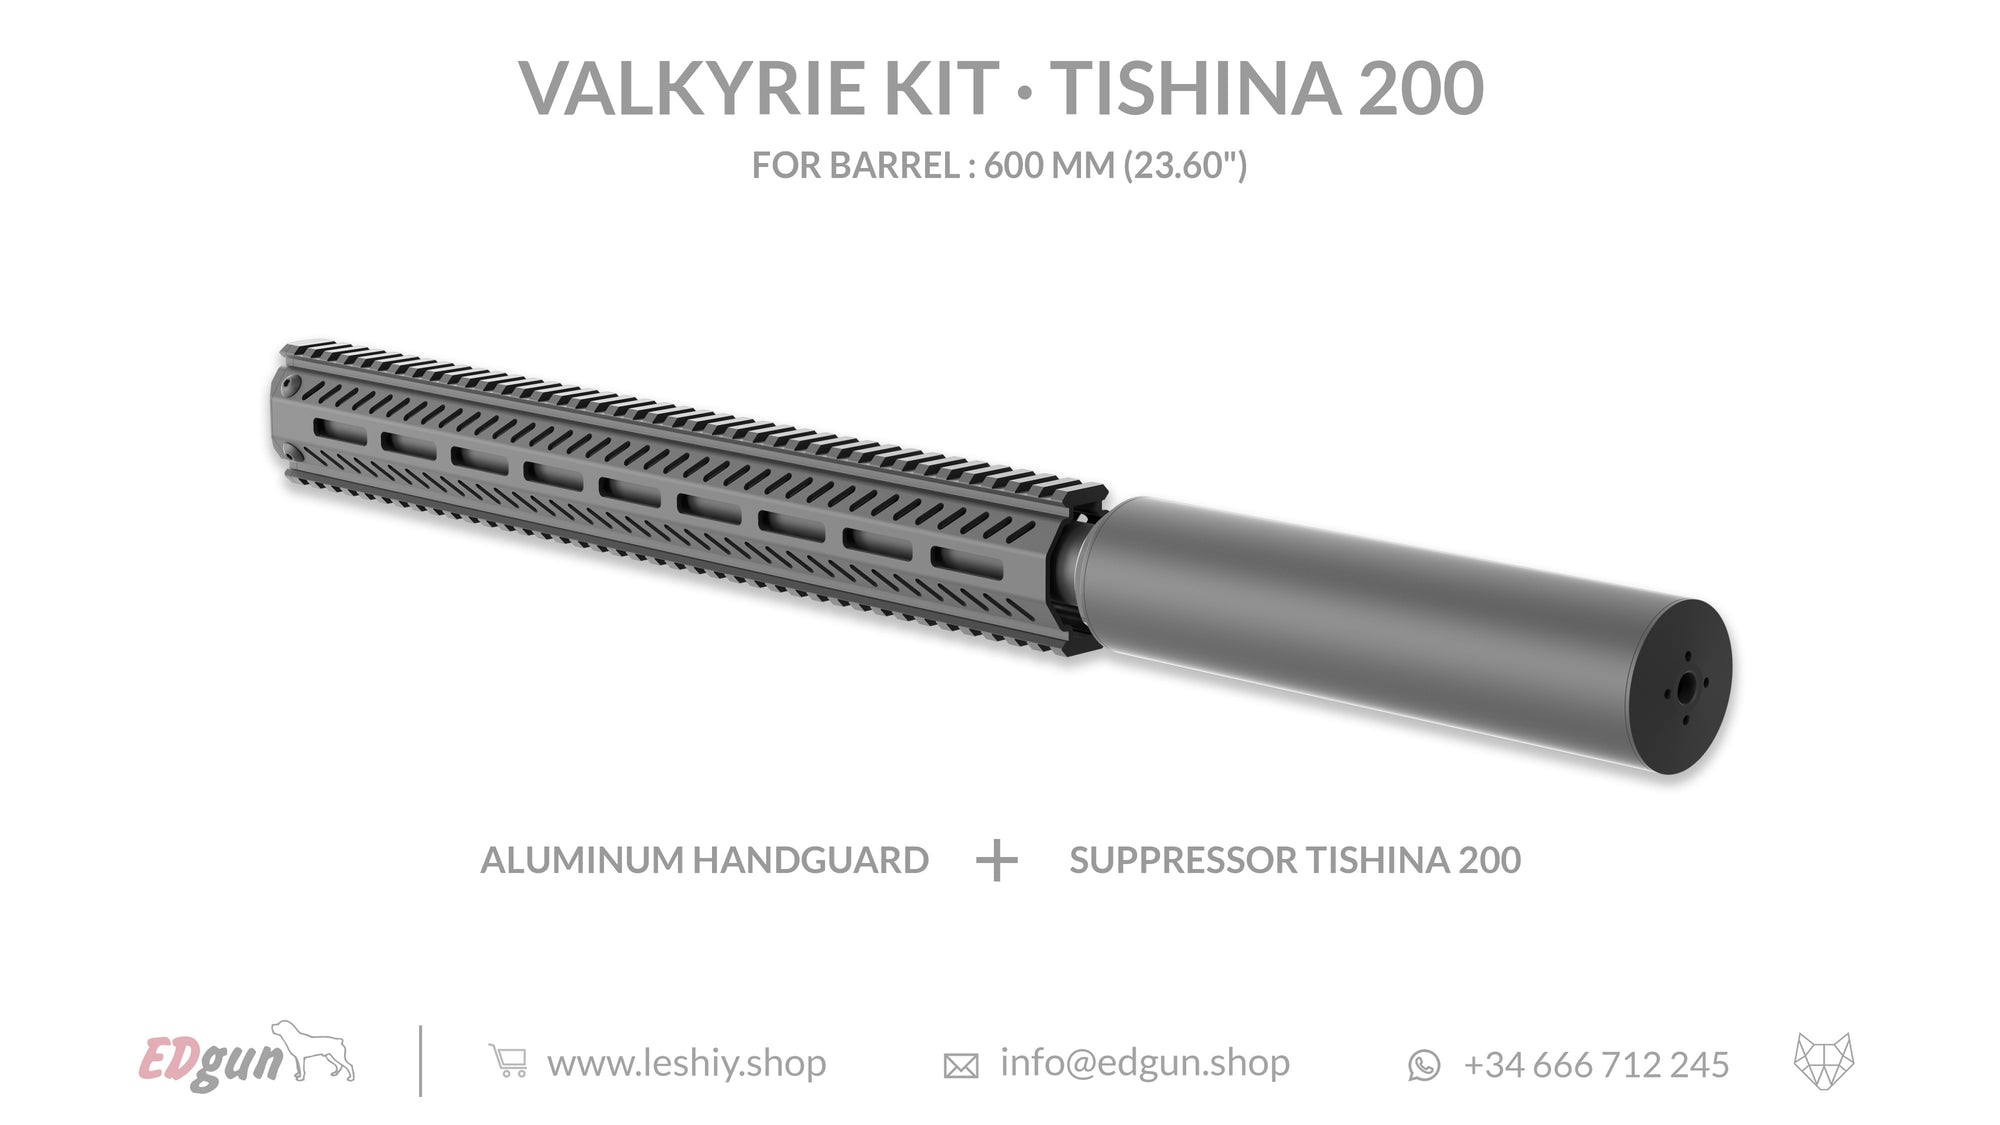 Kit Tishina 200 for barrel 600mm (23.60¨)